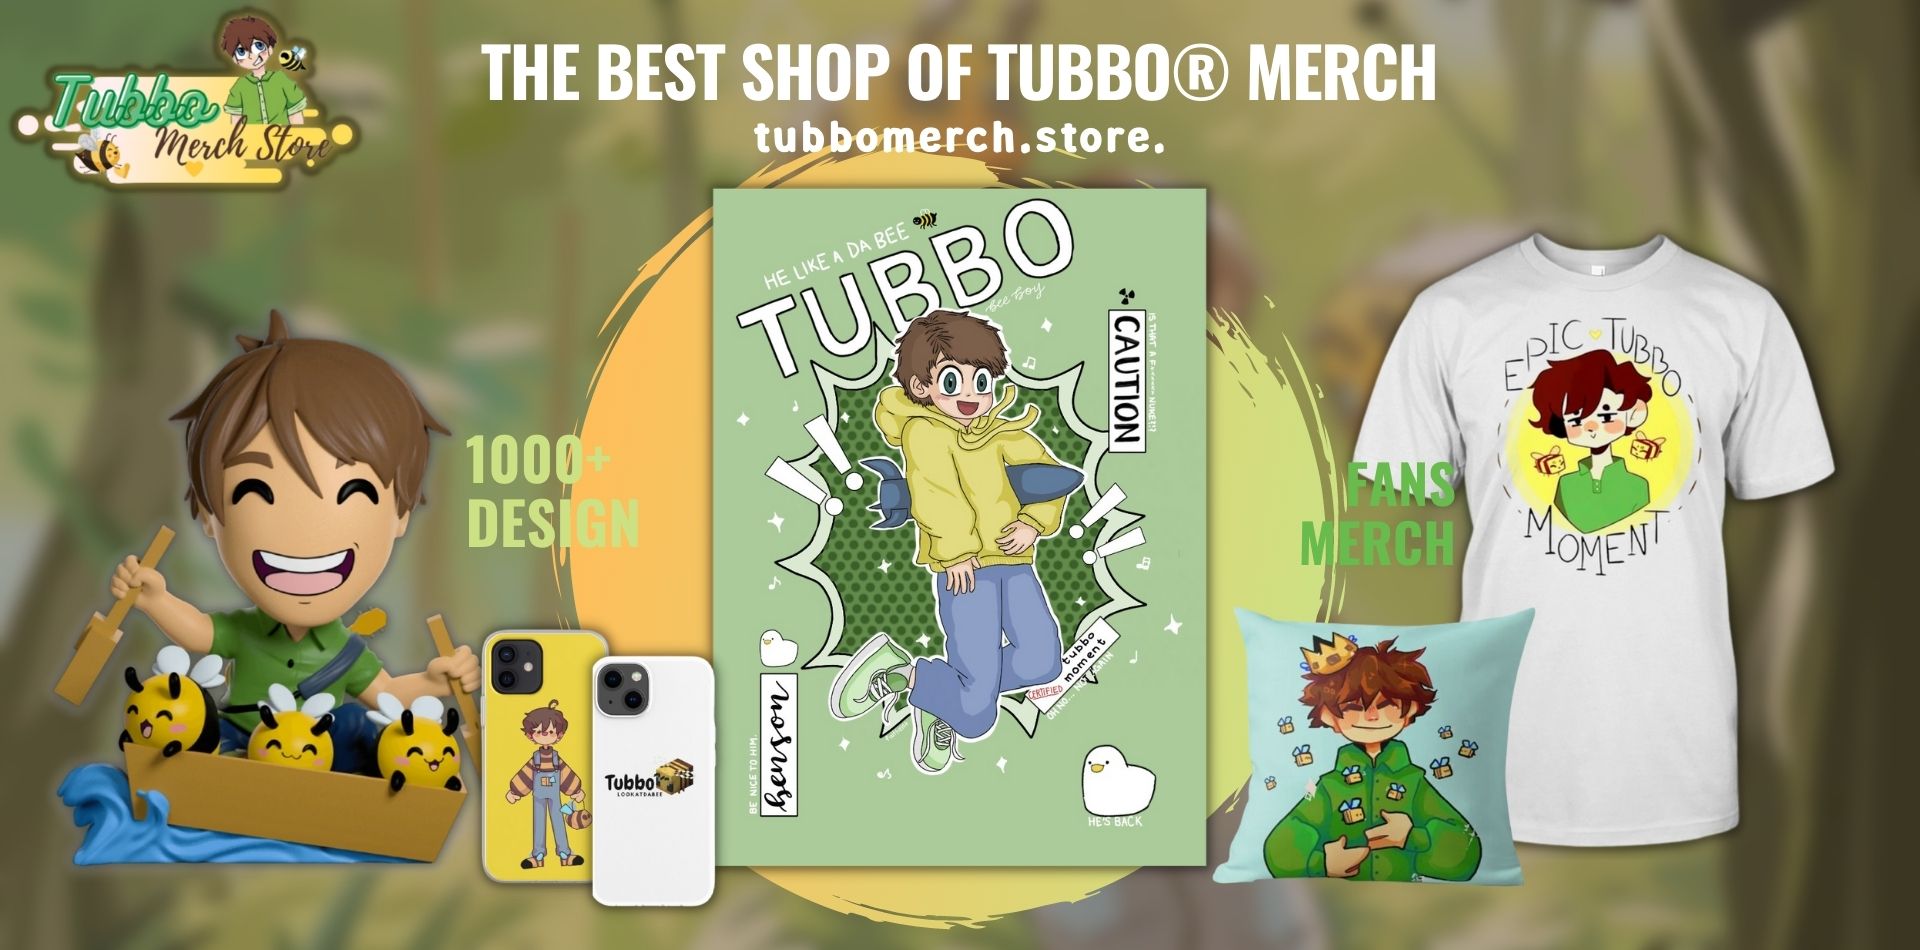 Tubbo Merch Store Web Banner - Tubbo Store